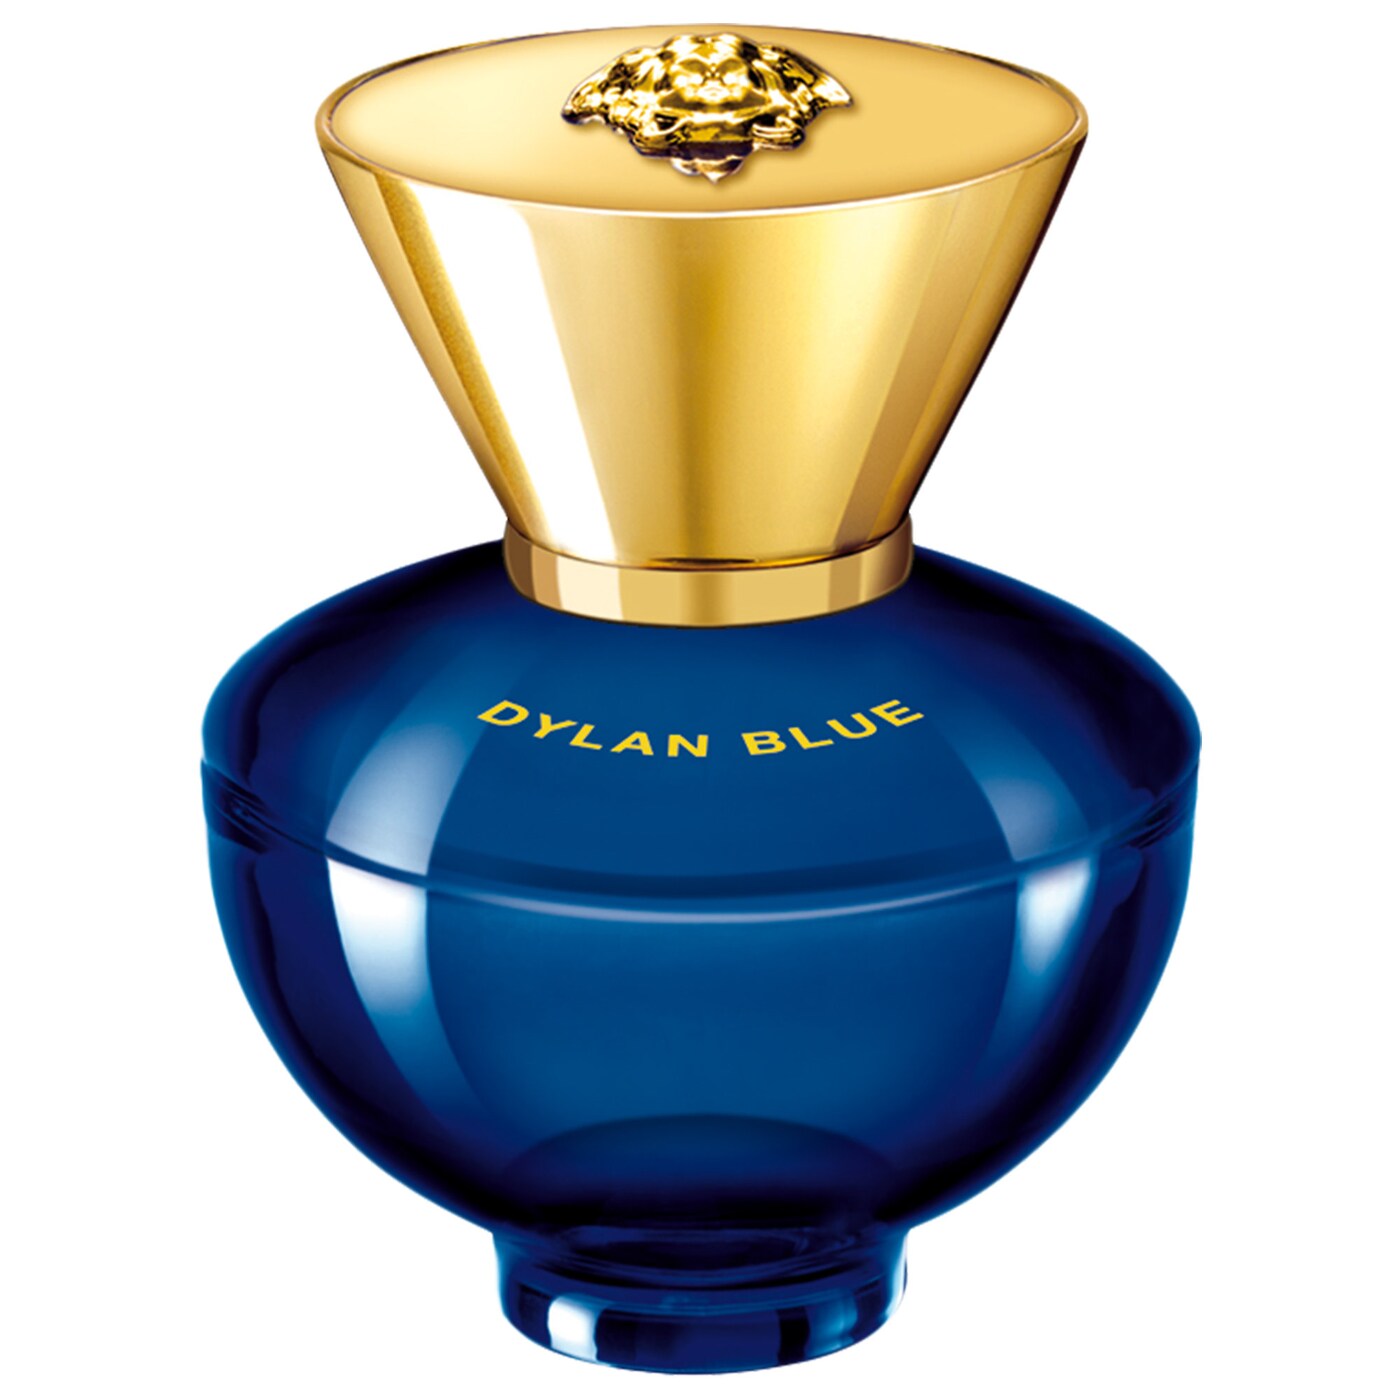 Dylan Blue Pour Femme trial size - 5 ml